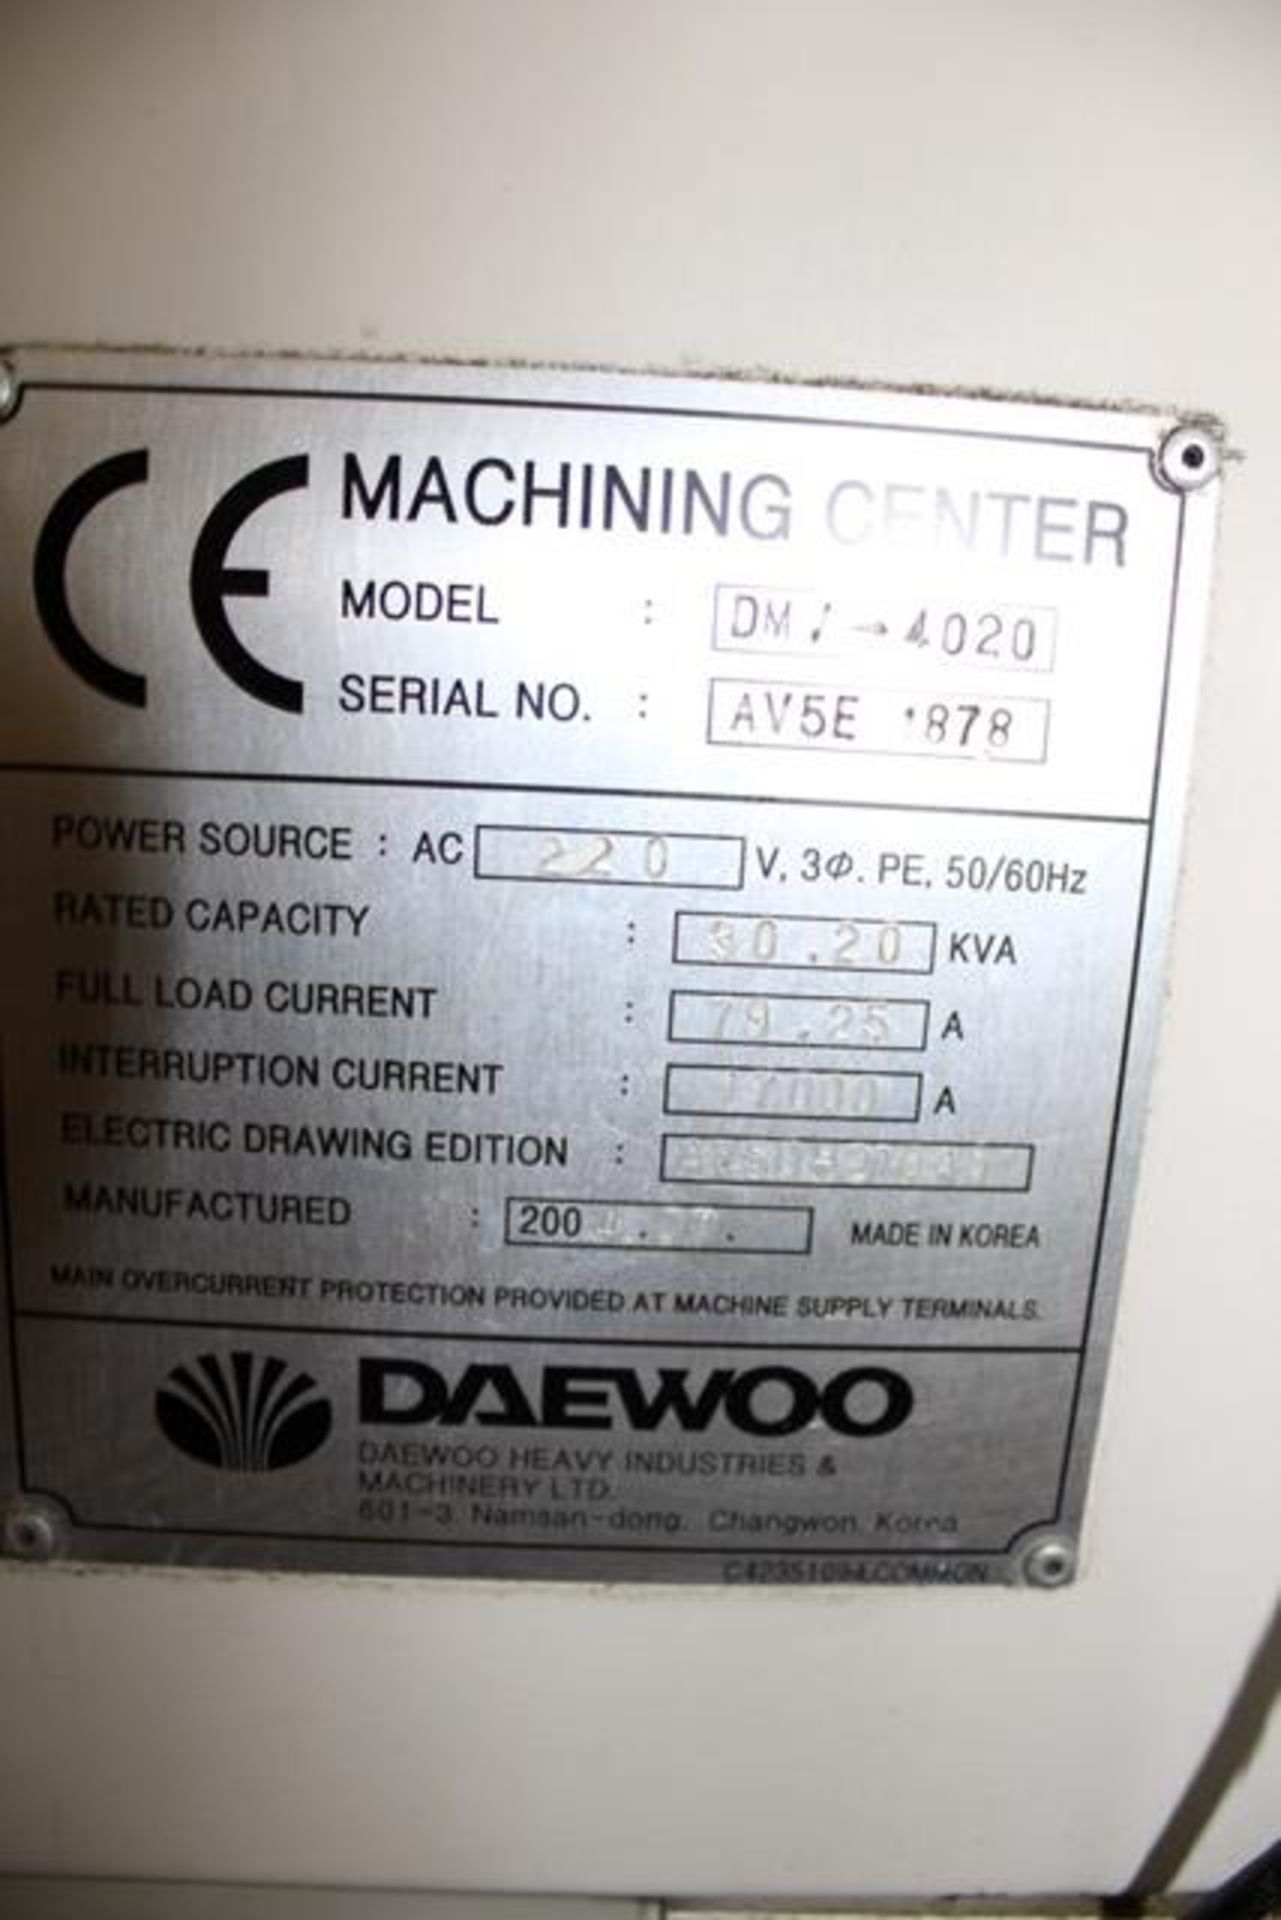 Daewoo Diamond Series DMV4020 CNC Vertical Machining Center - Image 5 of 5